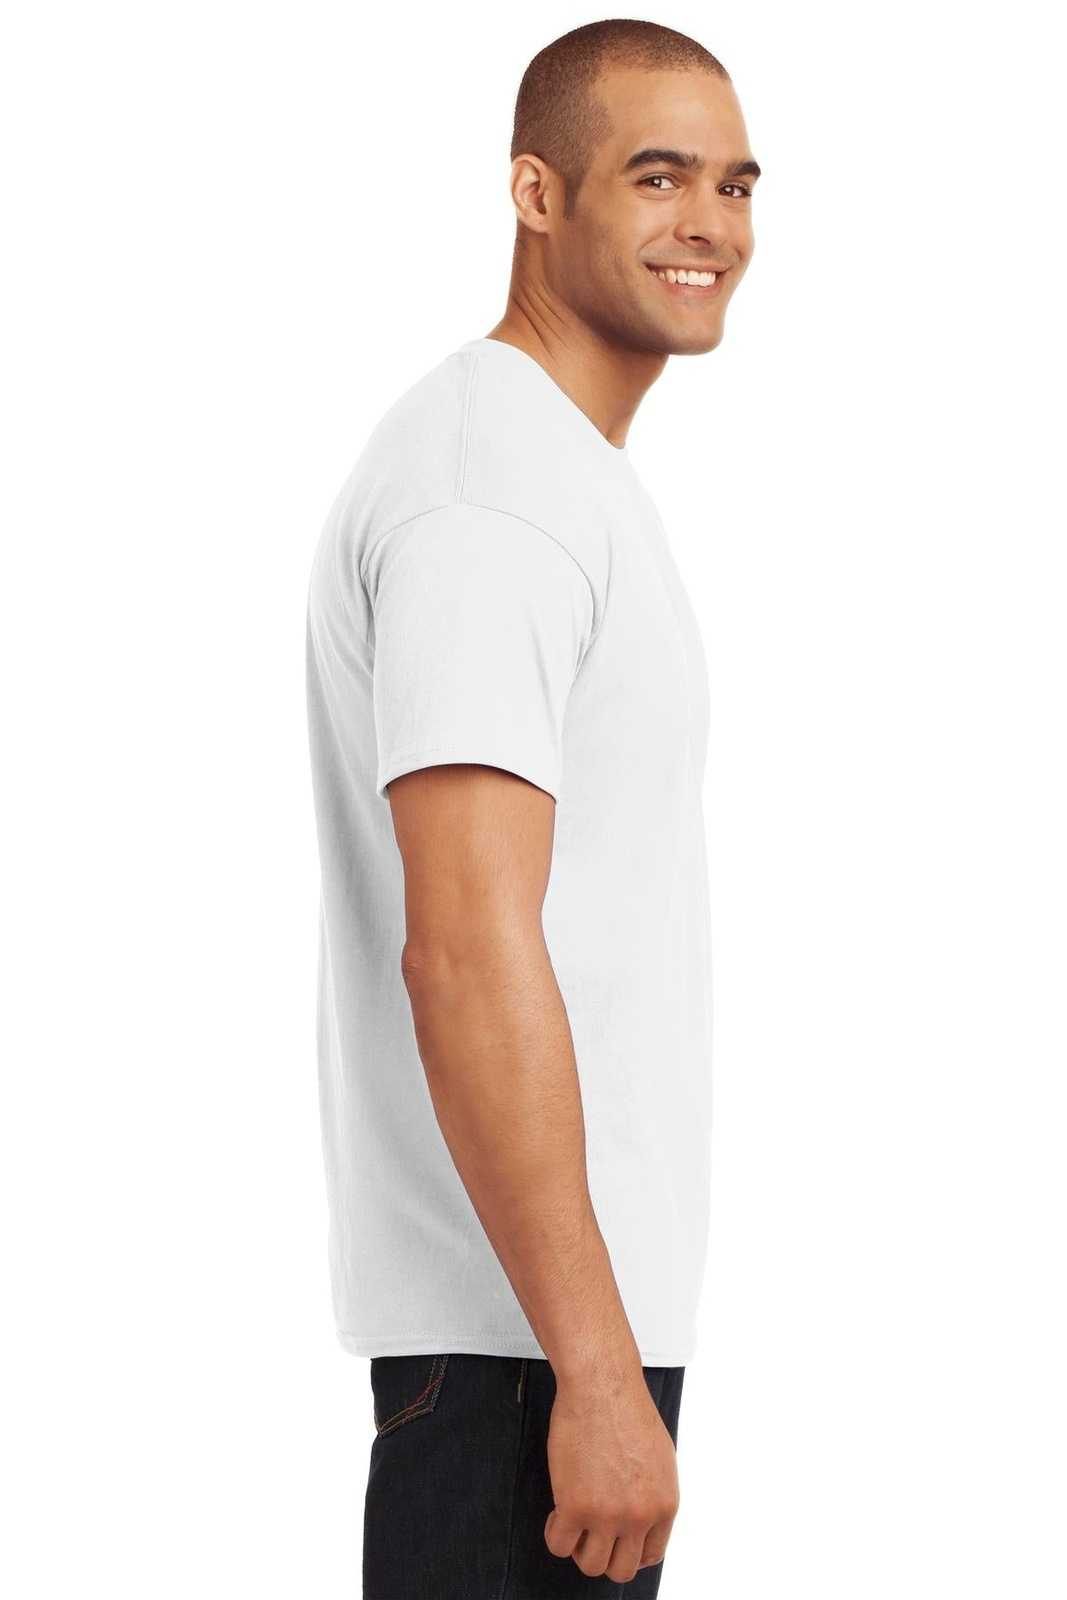 Hanes 5170 Ecosmart 50/50 Cotton/Poly T-Shirt - White - HIT a Double